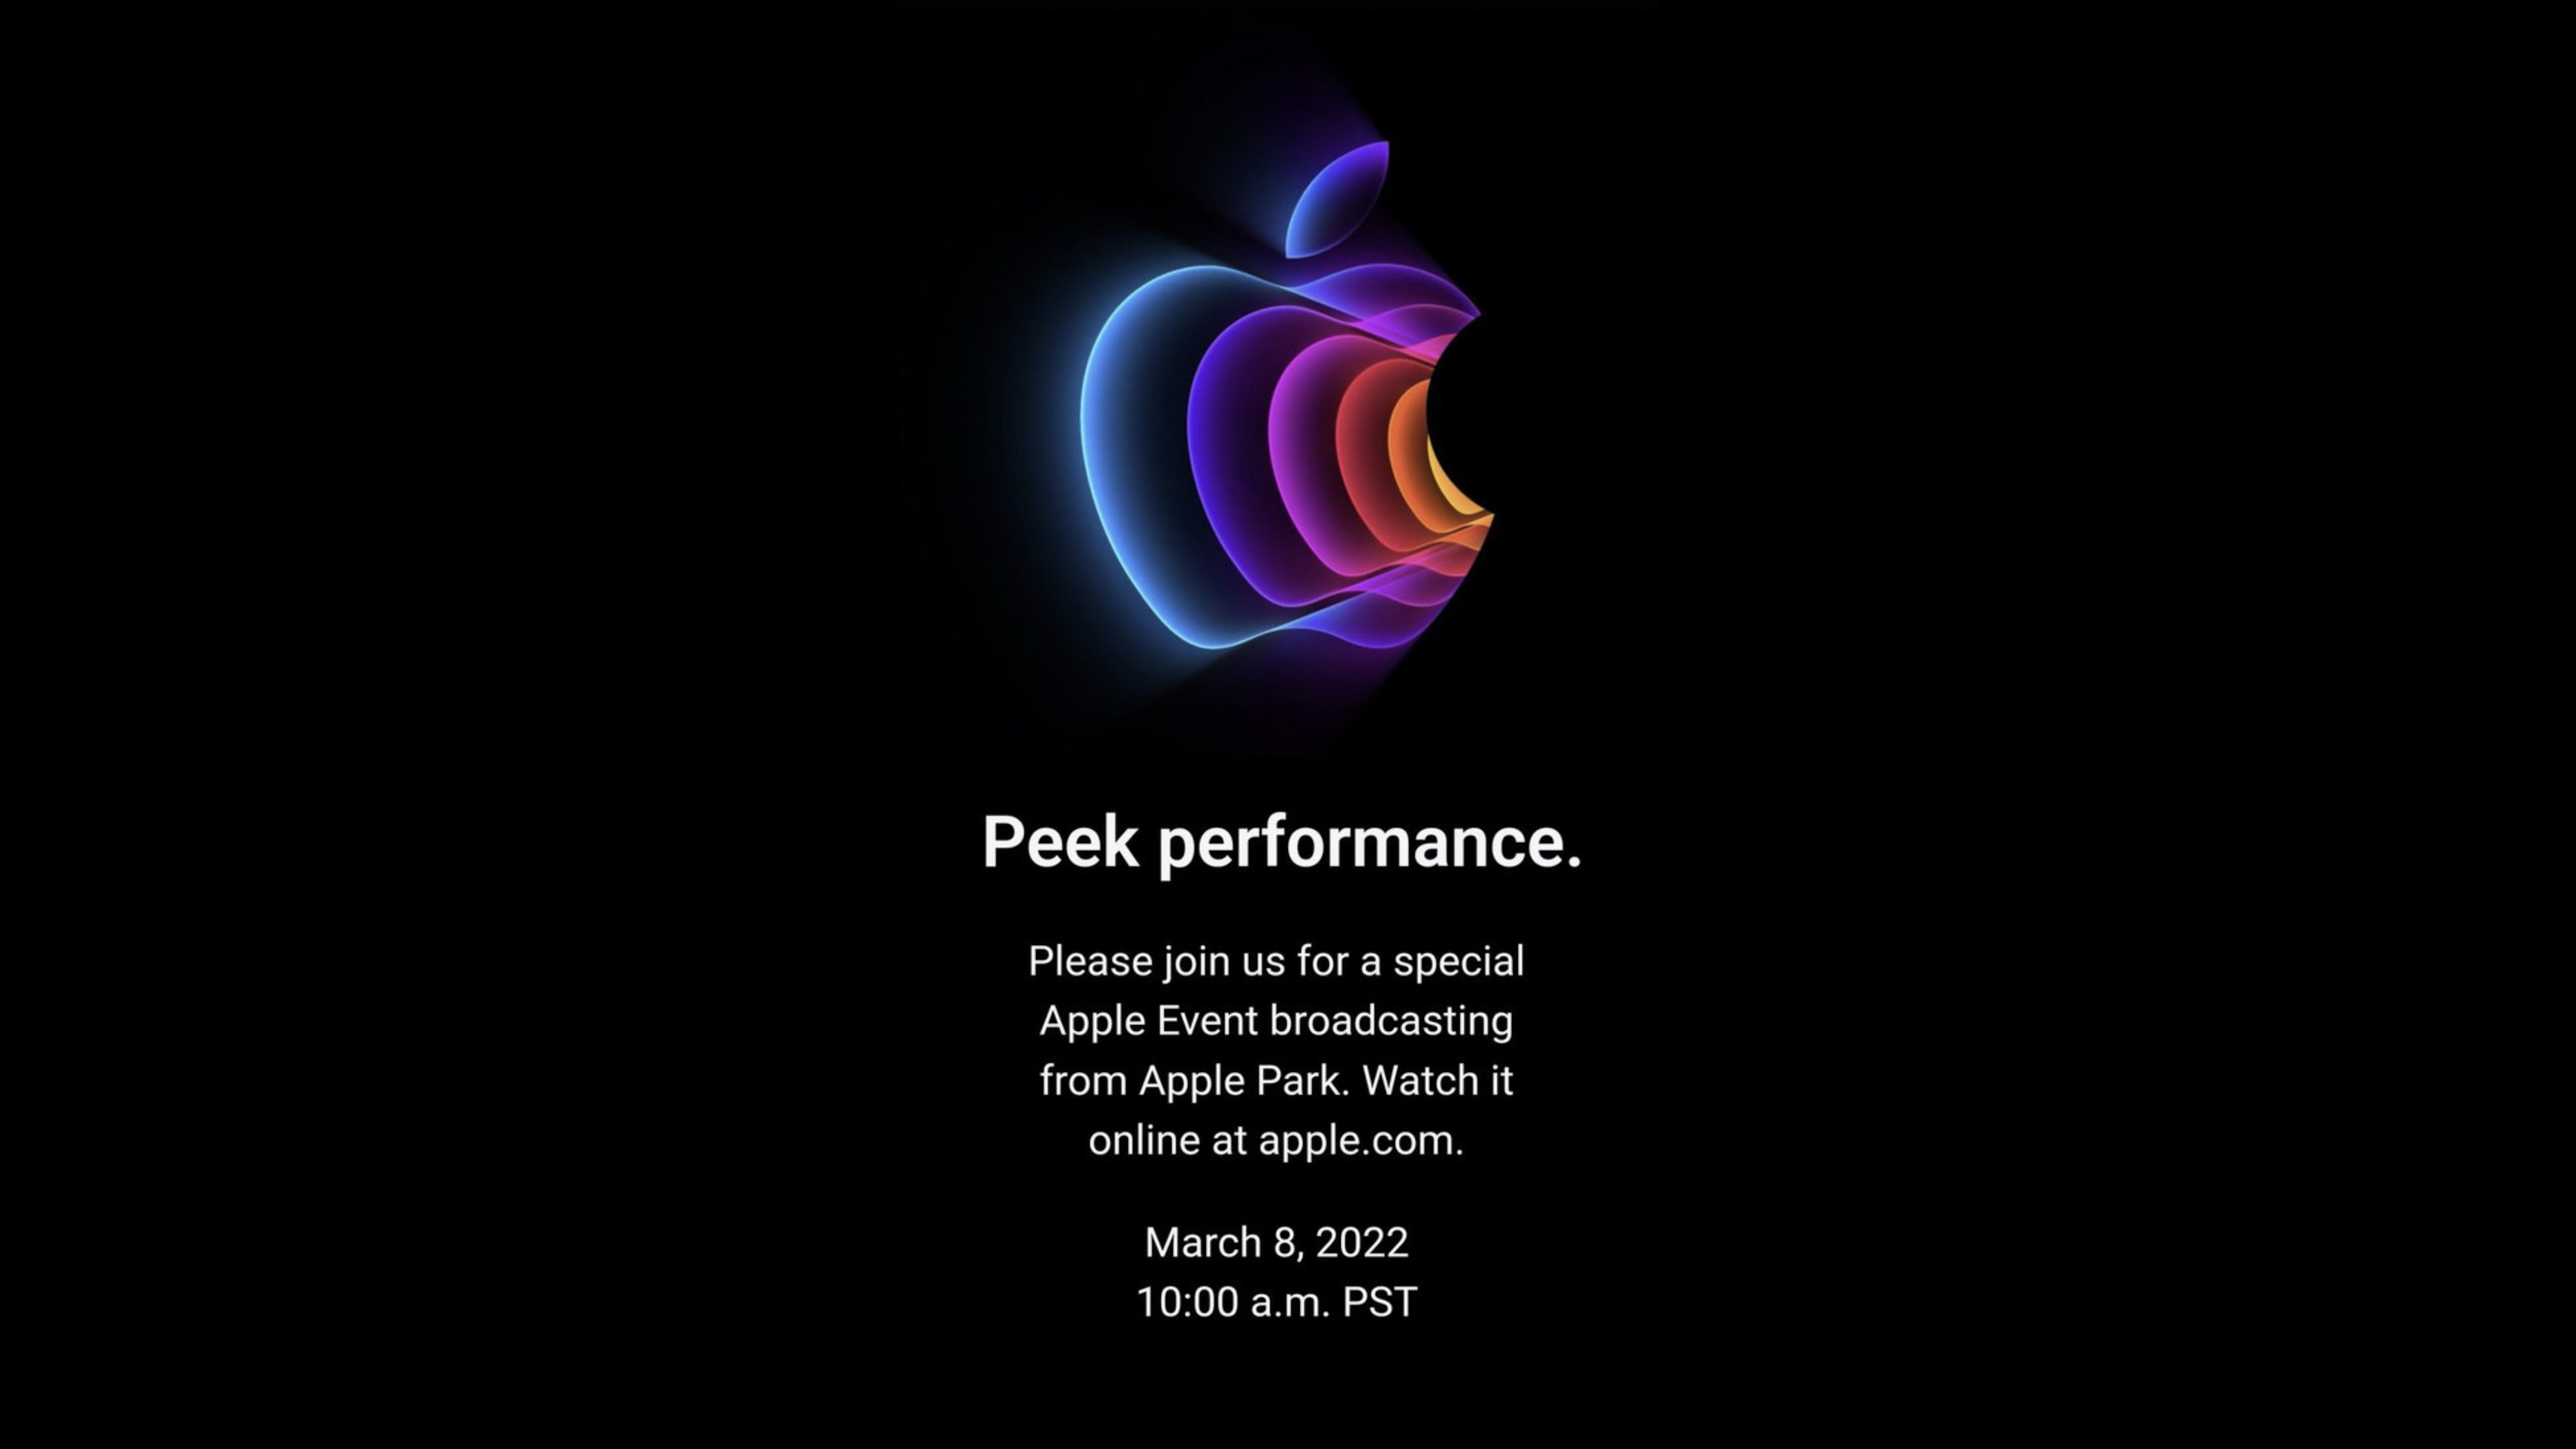 Apple Spring Event March 8, 2022 "Peek Performance" World News